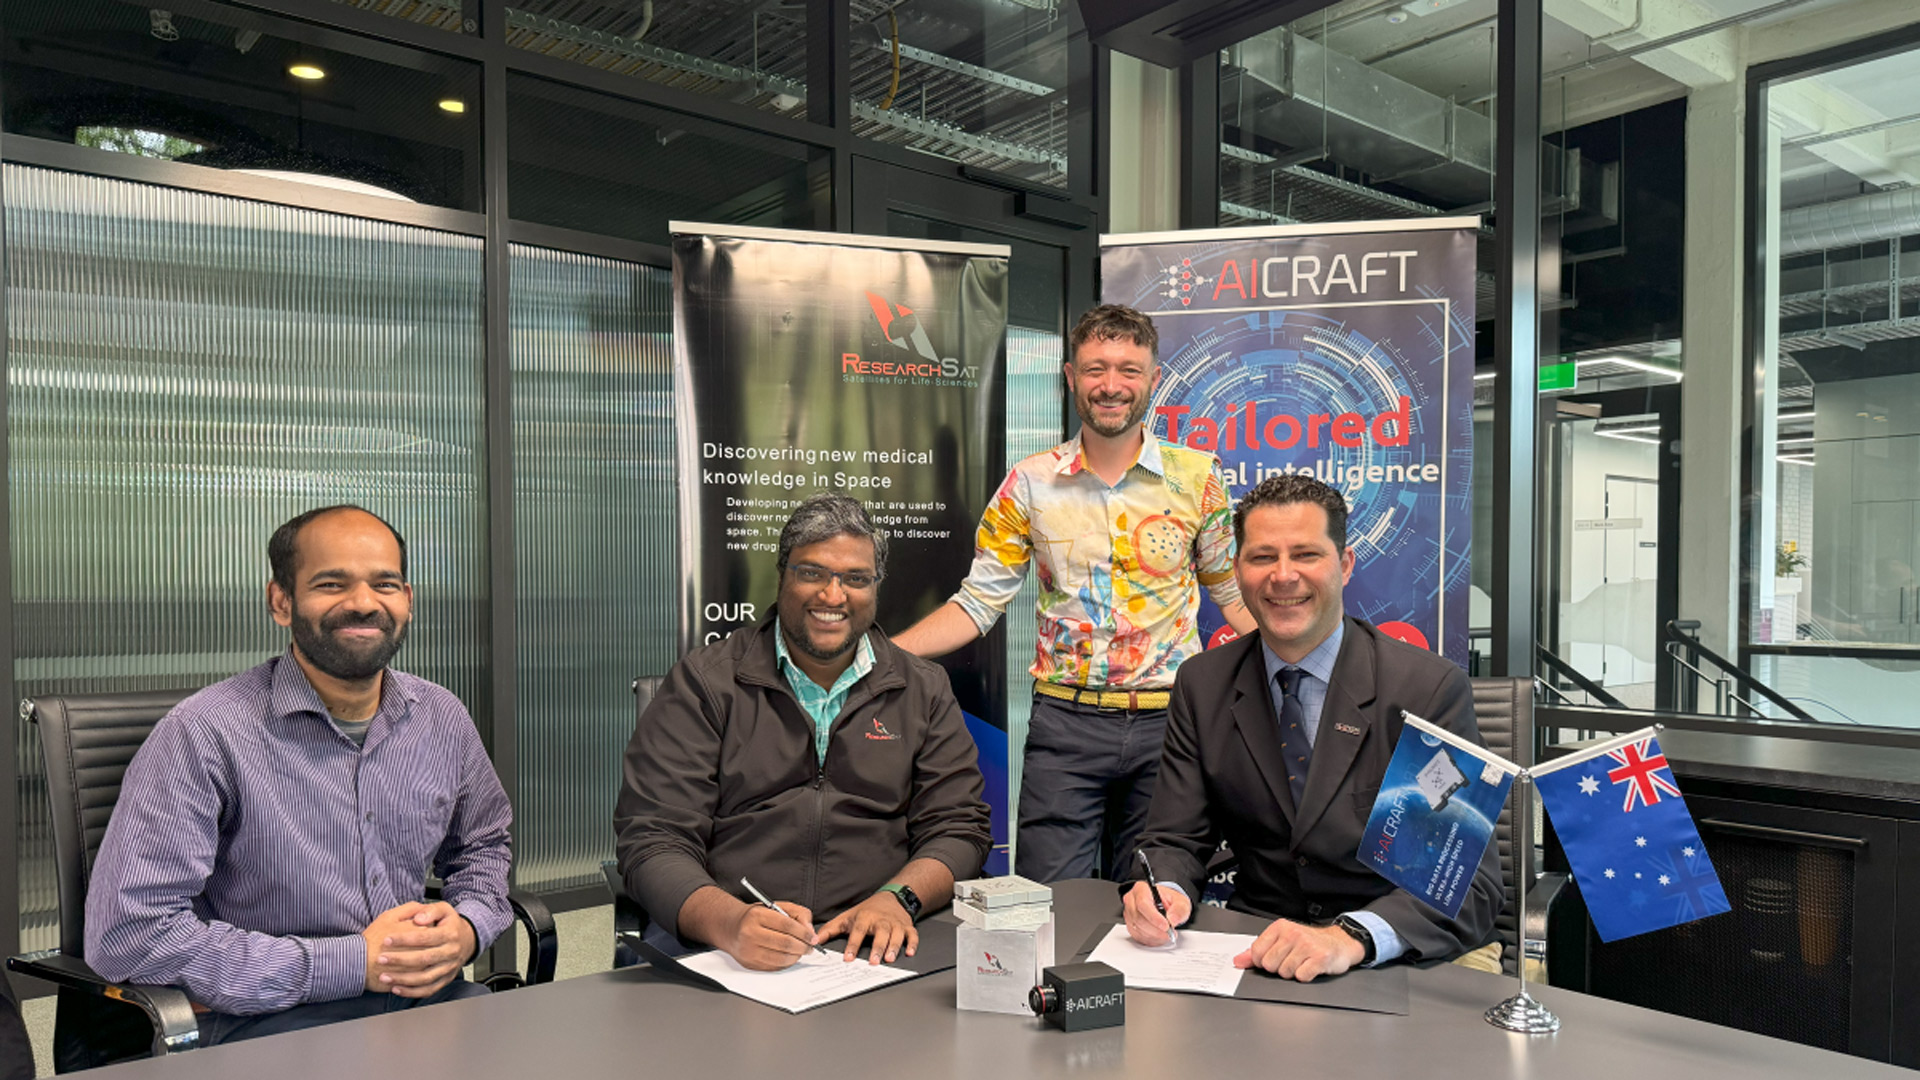 Signing of the MoU with (L-R) Jibin Dhanaraj (CTO, ResearchSat), RaviTeja Duggineni (CEO, ResearchSat), Craig Jones (Deputy Director, Innovation & Collaboration Centre, University of South Australia) and Dr Tony Scoleri (CEO, AICRAFT).